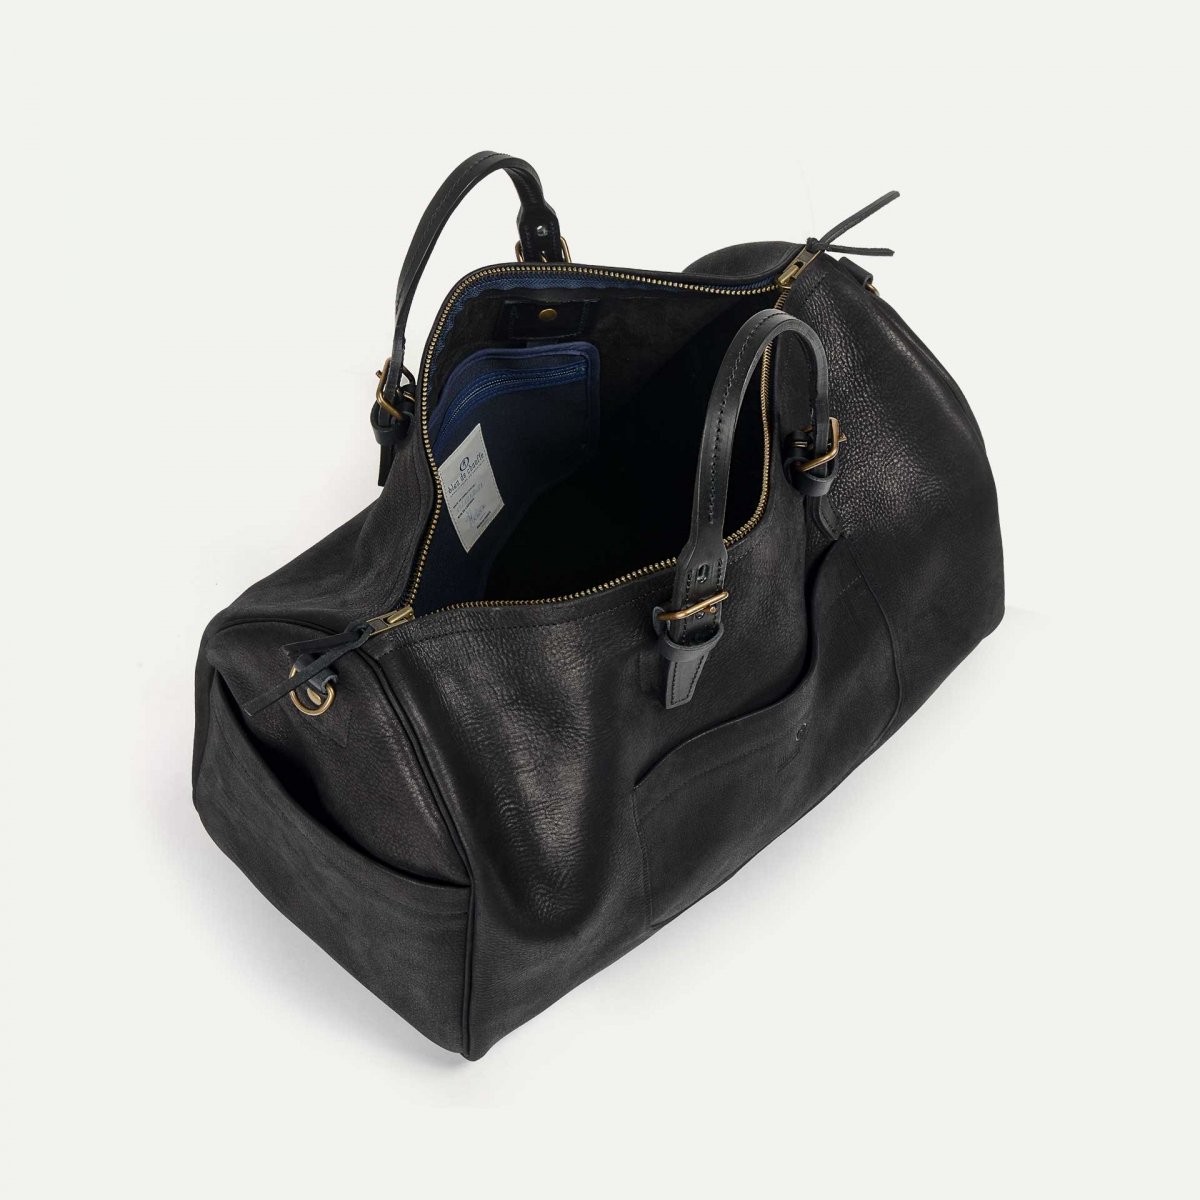 Hobo Travel bag - Charcoal black / Waxed Leather (image n°5)